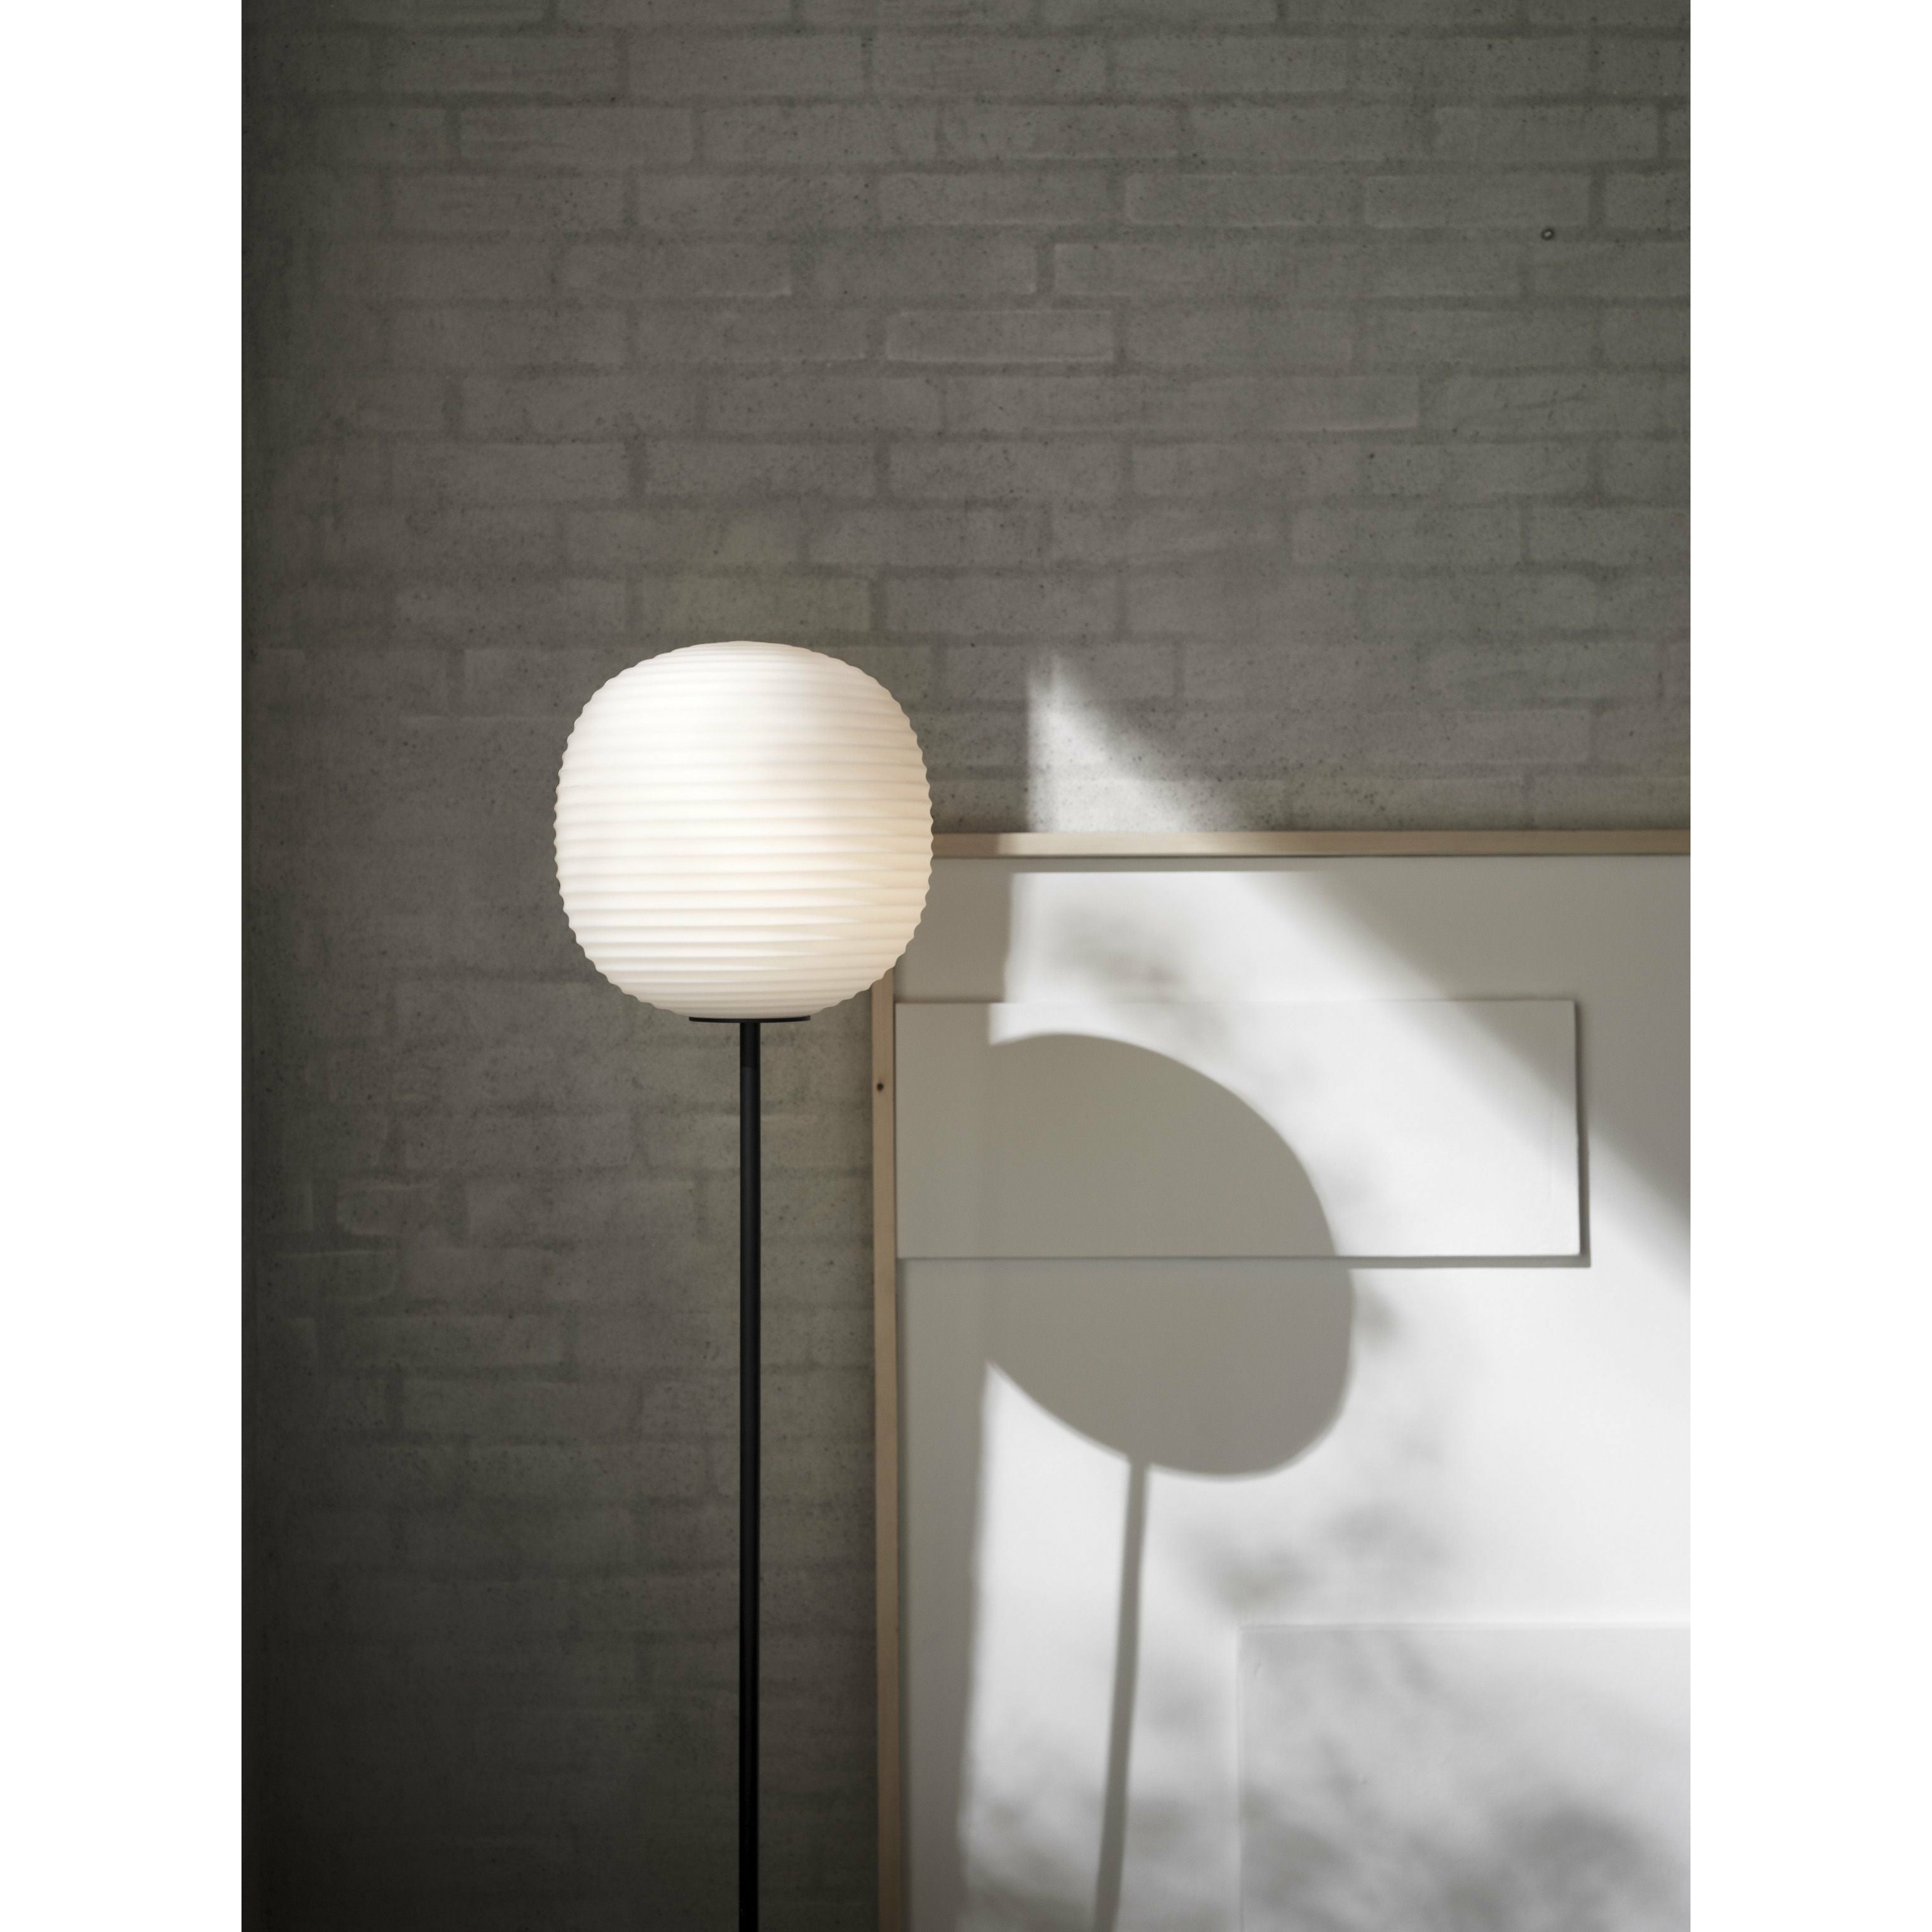 Nuove opere Lampada per pavimenti lanterna, Ø30 cm